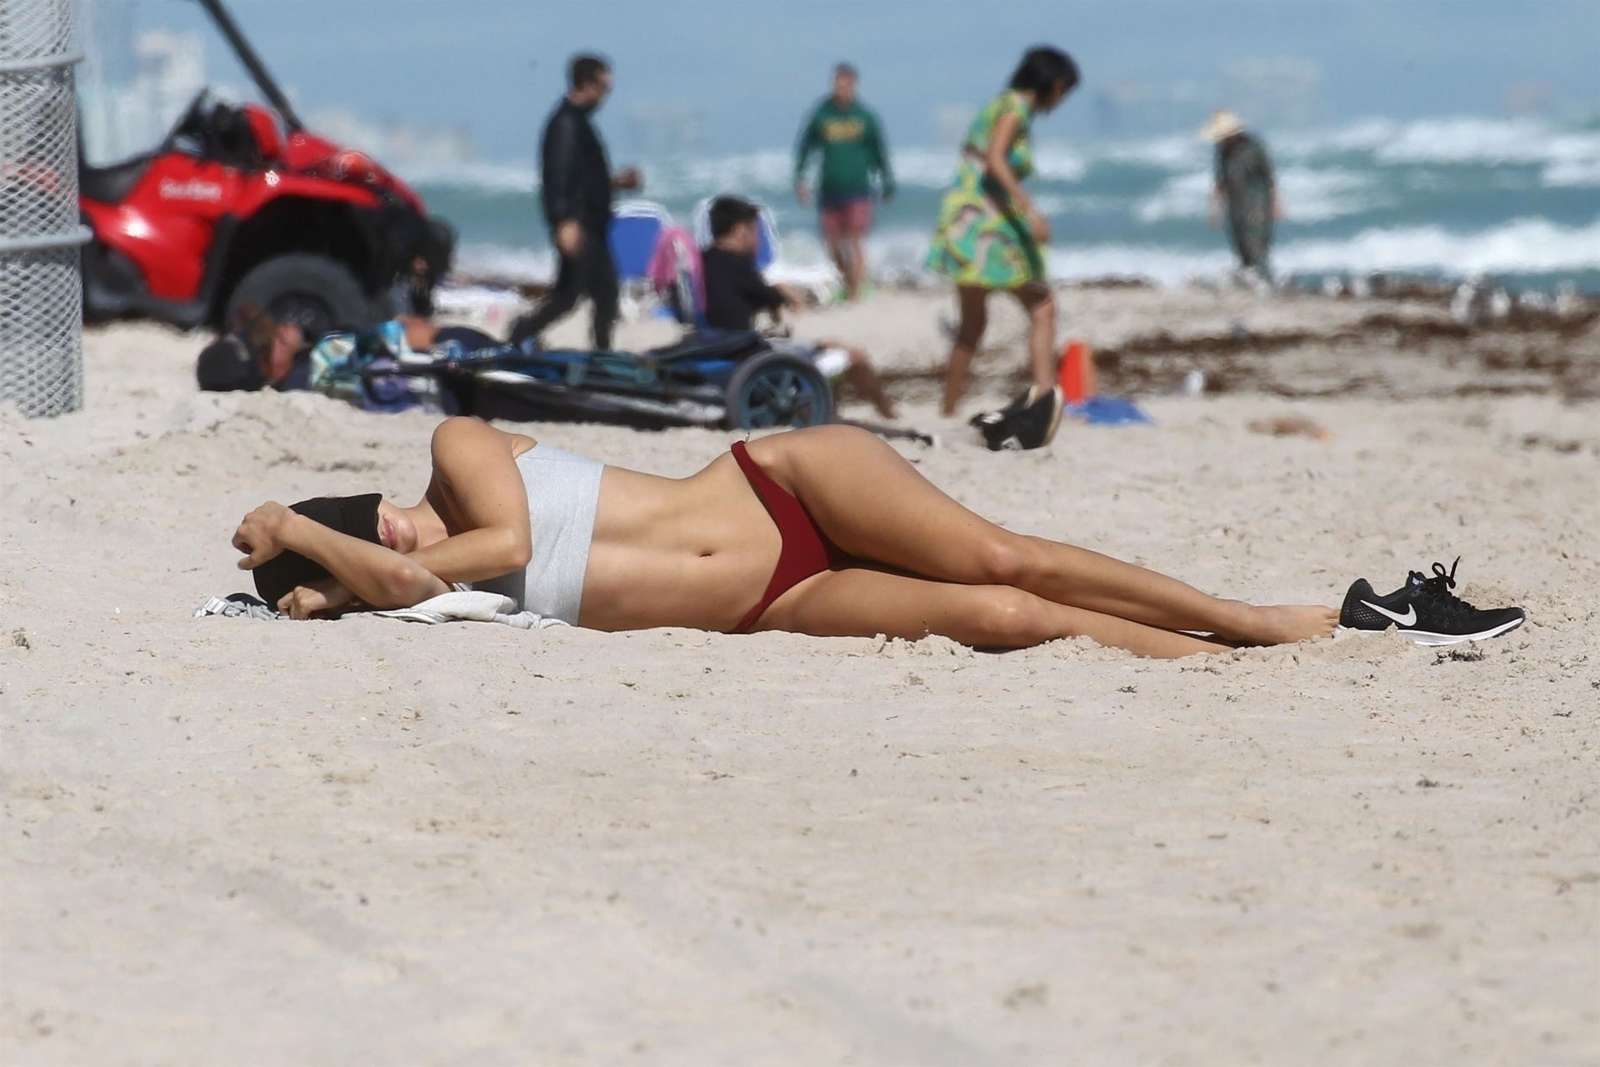 Kimberley Garner in Red Bikini and Sports Bra at the beach in Miami